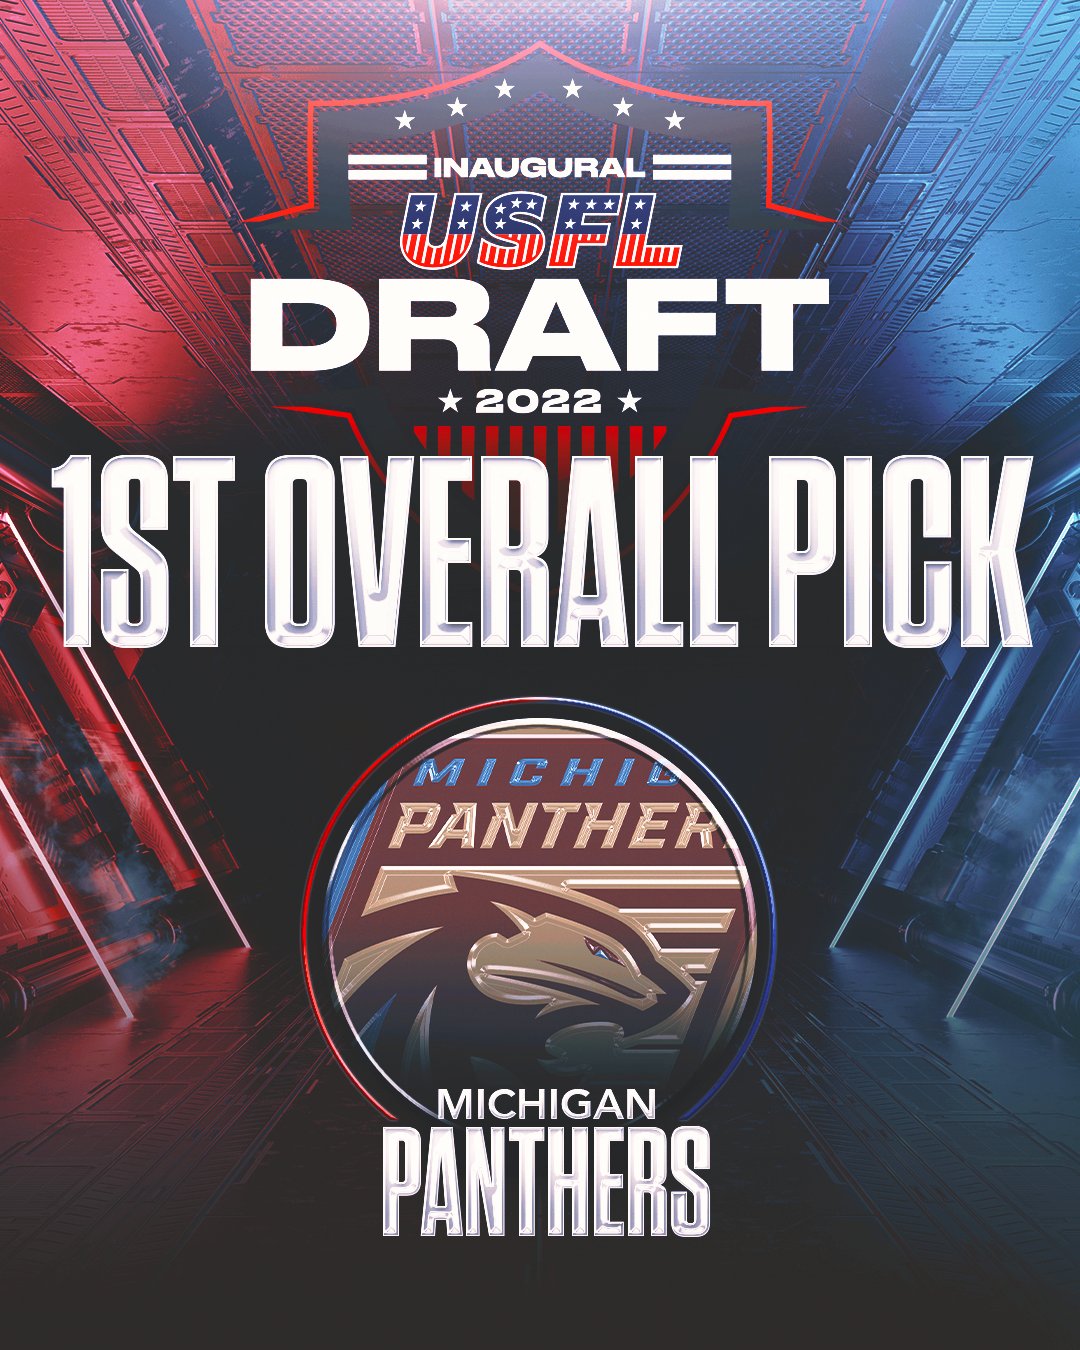 Michigan Panthers (@USFLPanthers) / X